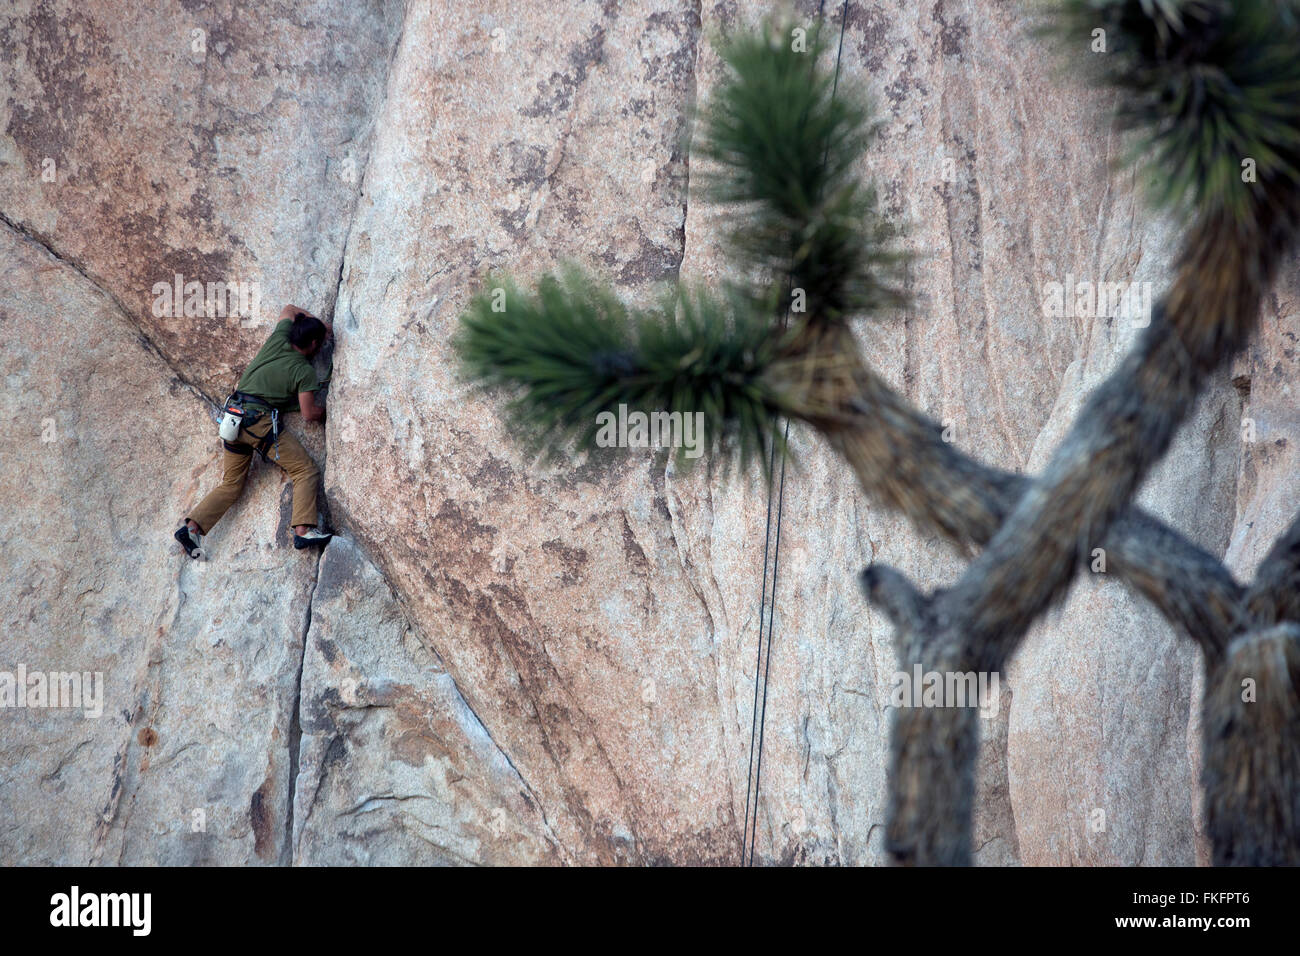 Rock climber, Hidden Valley, Joshua Tree National Park, California, USA Stock Photo